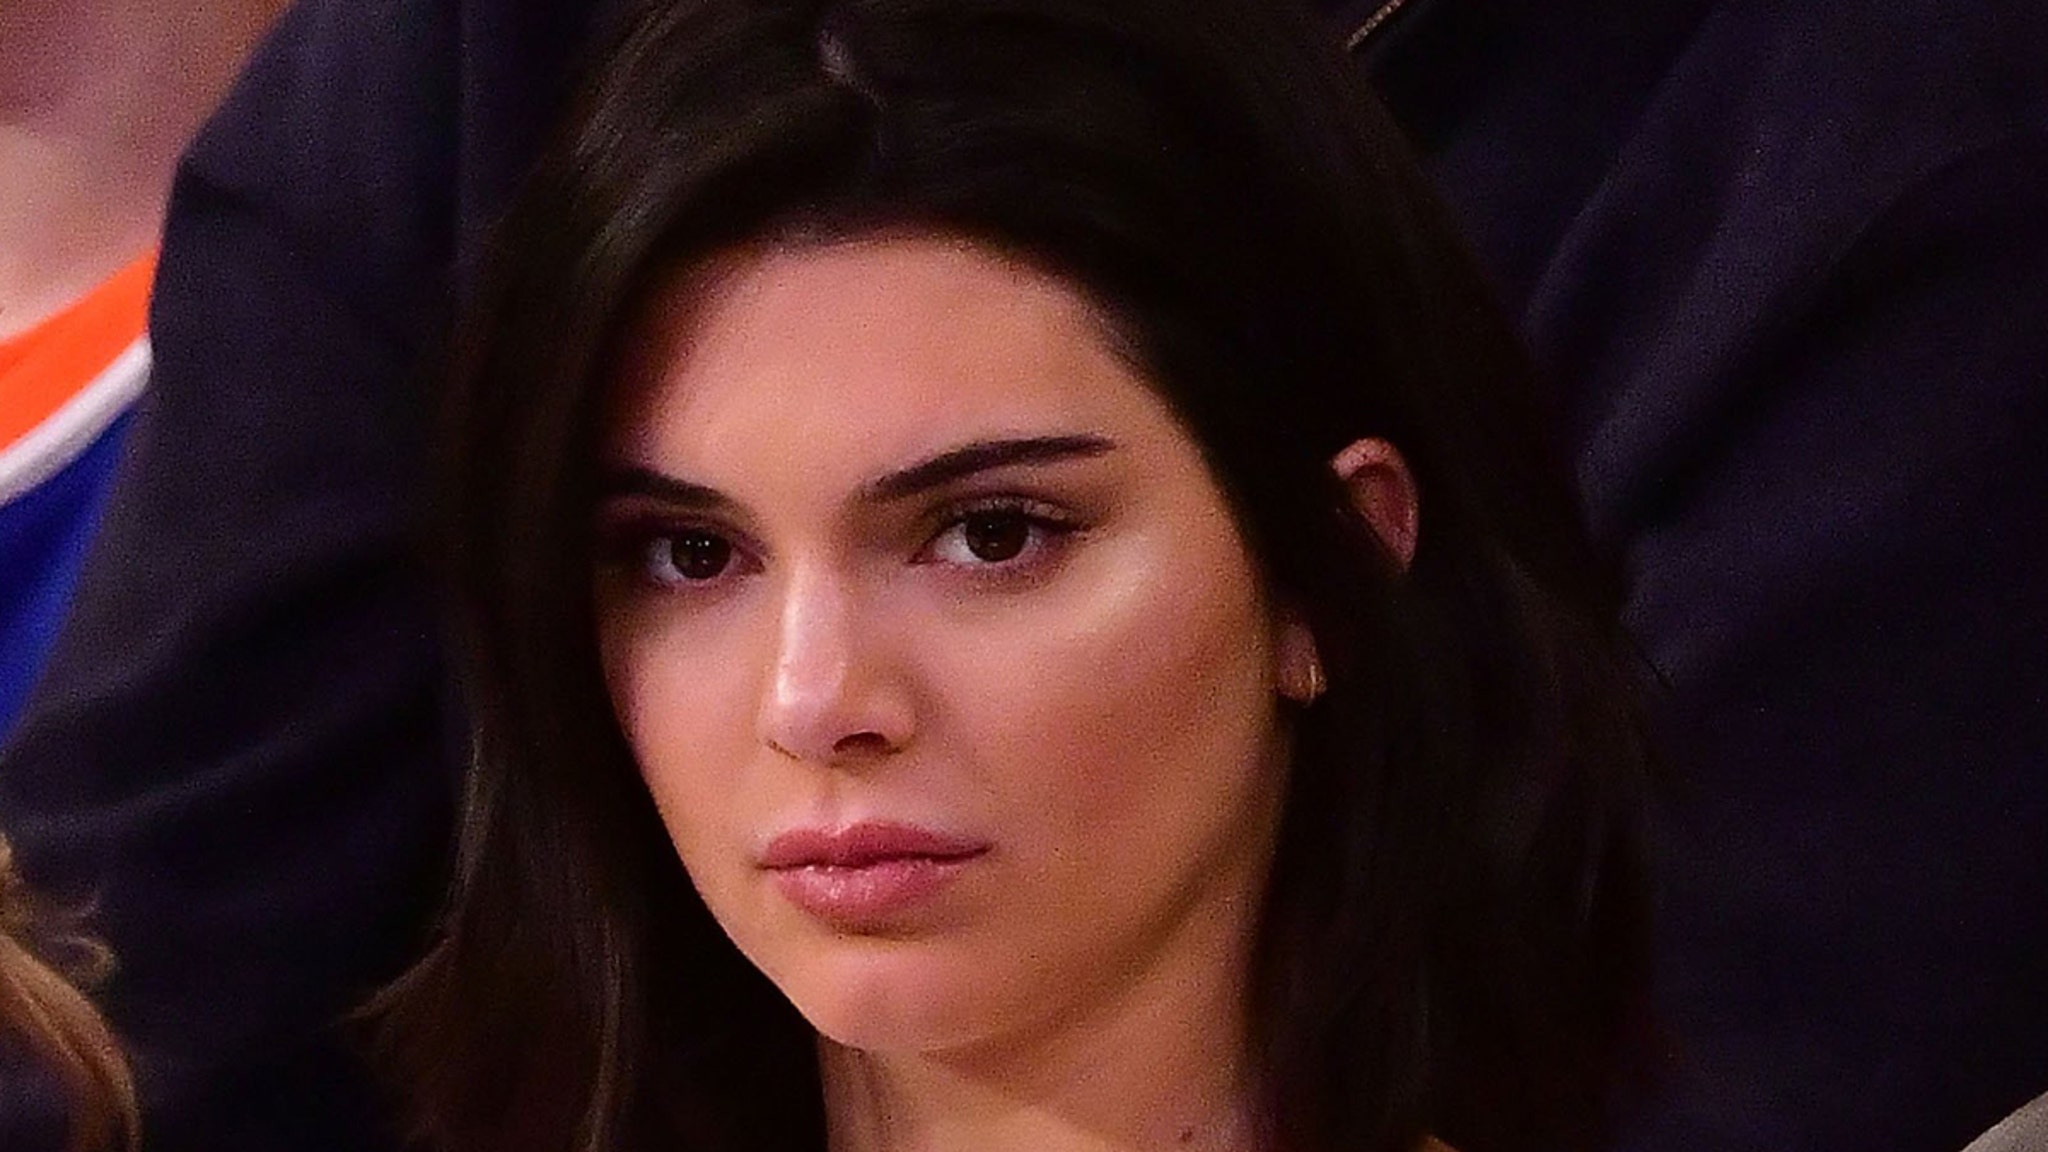 Kendall Jenner, 'Tragedy' Averted After Alleged Stalker Arrested by ICE